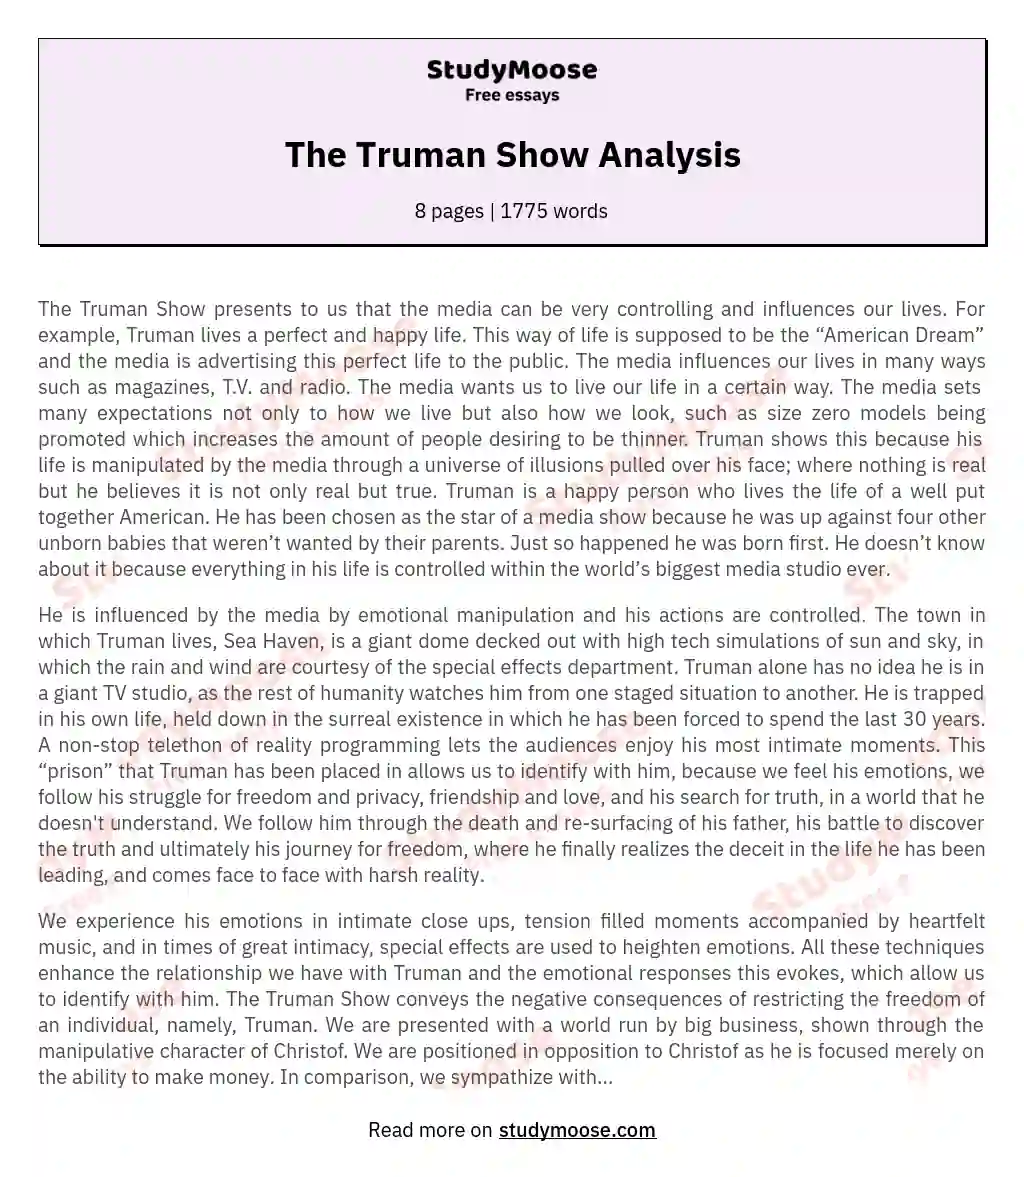 The Truman Show Analysis essay